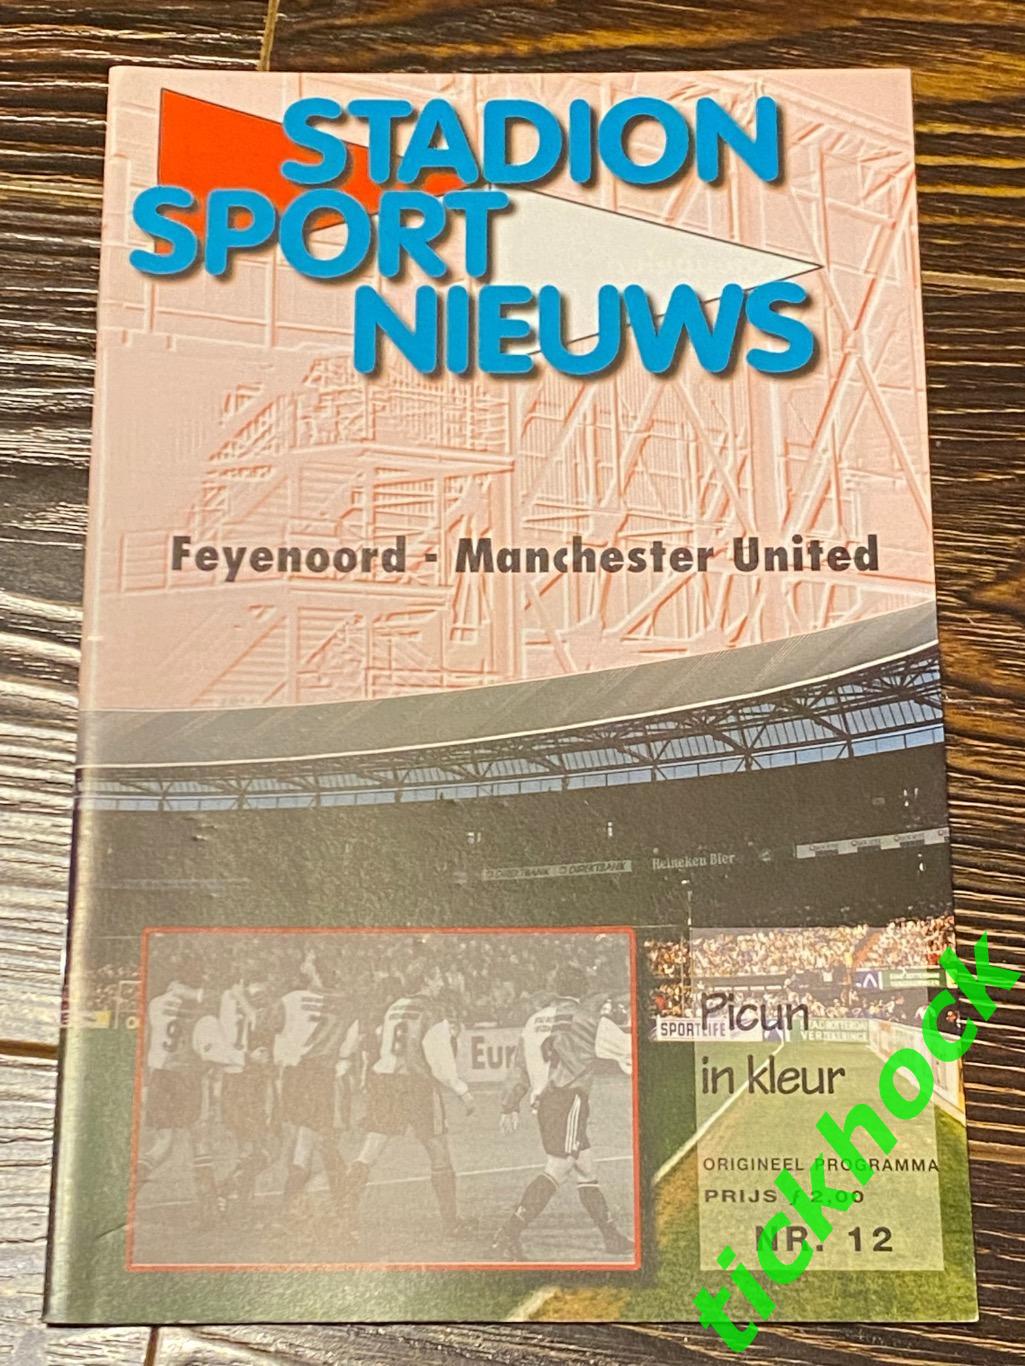 SY Фейеноорд Роттердам - Манчестер Юнайтед 1997 05.11. Лига Чемпионов(стадионн.)